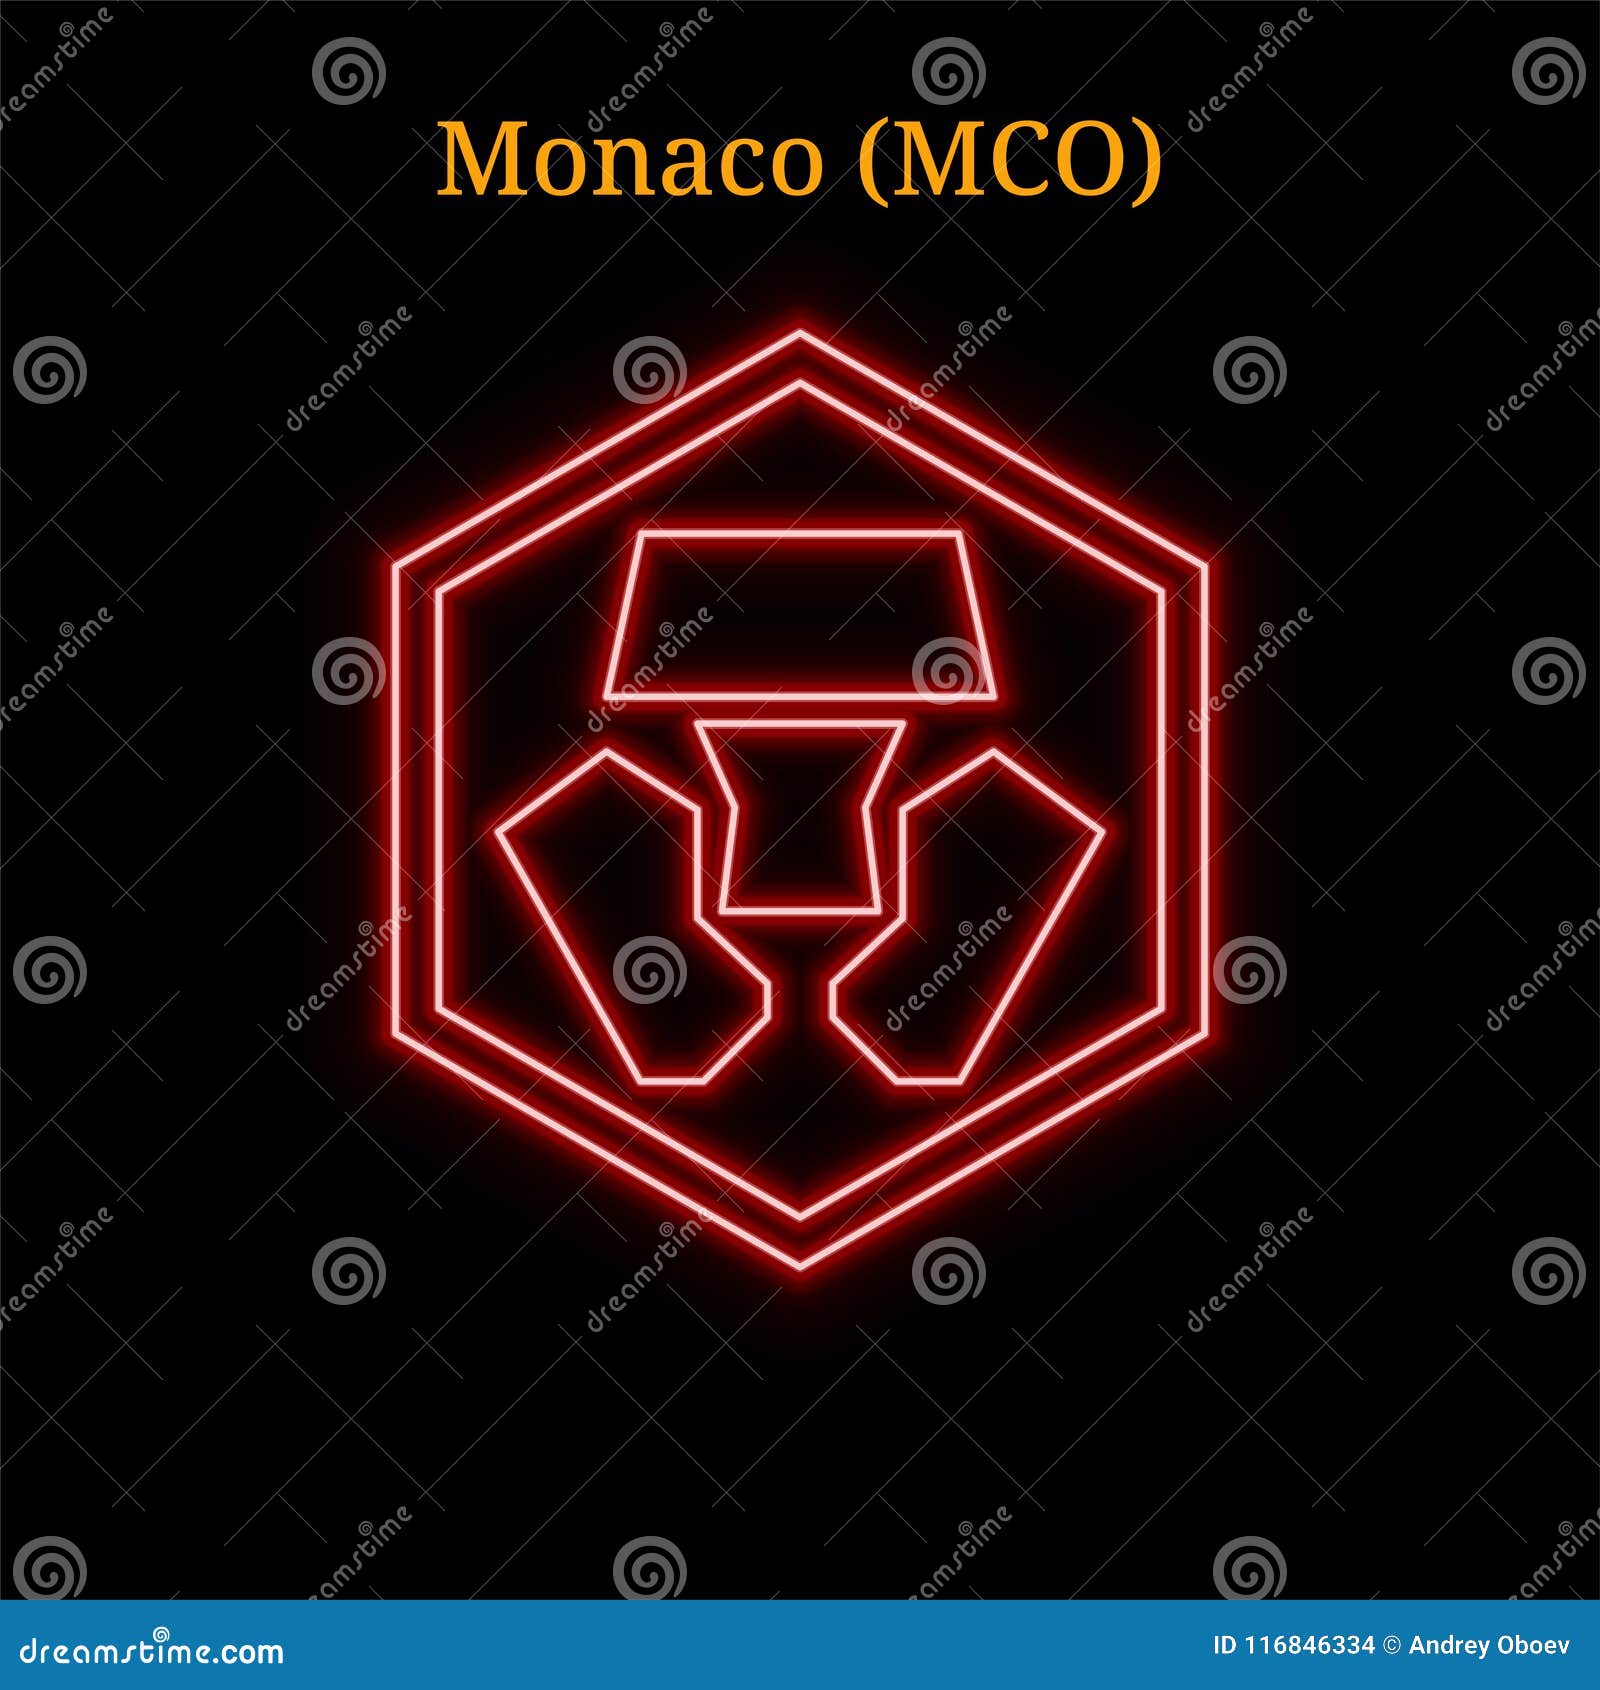 Red Neon Monaco MCO Cryptocurrency Symbol Stock Vector ...